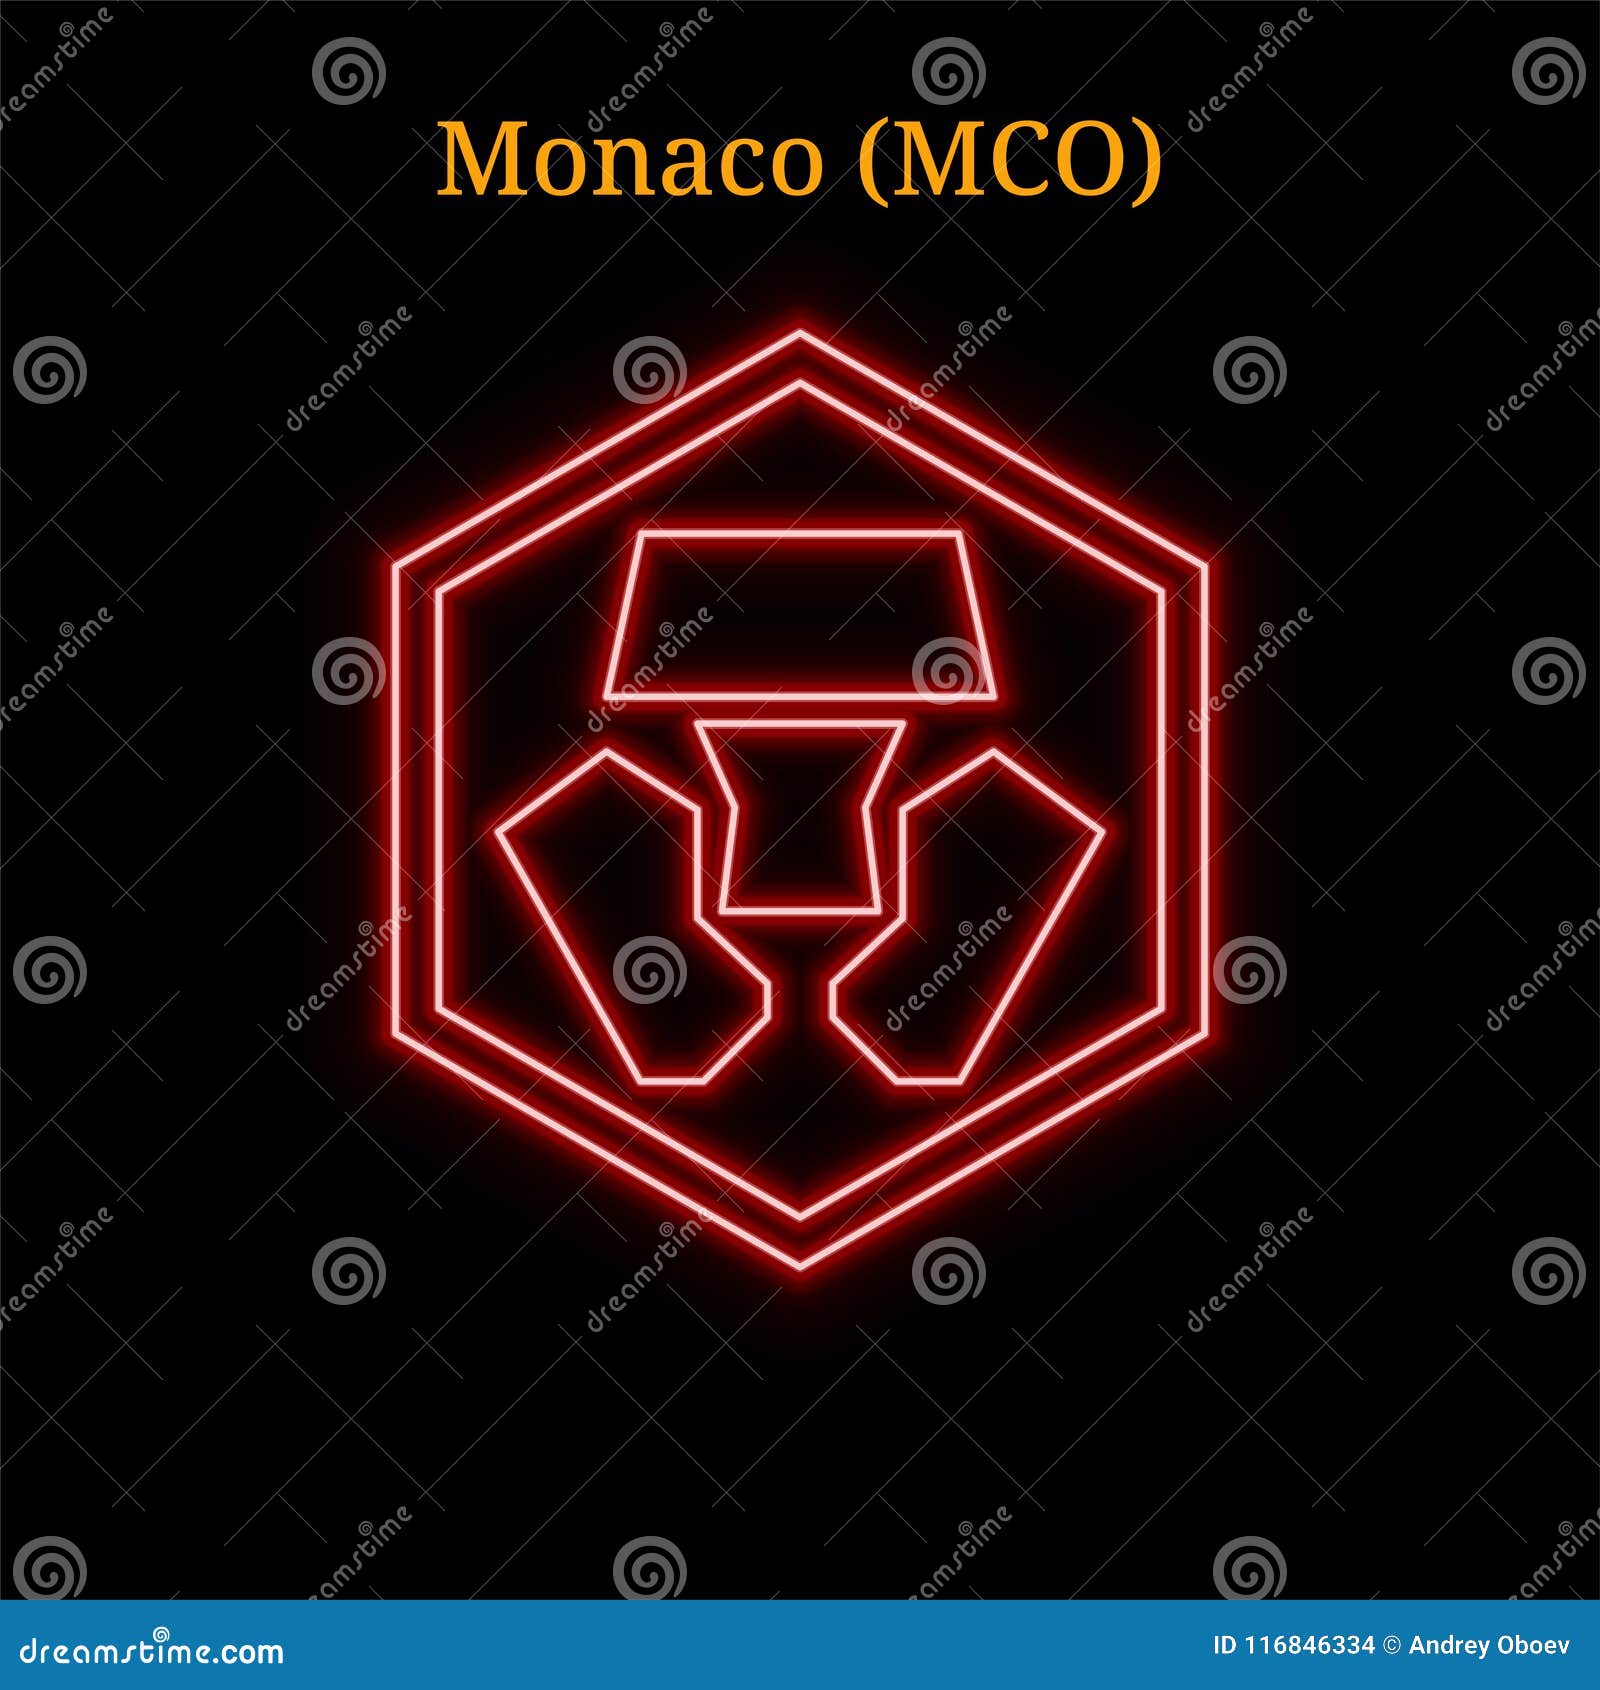 Red Neon Monaco MCO Cryptocurrency Symbol Stock Vector ...